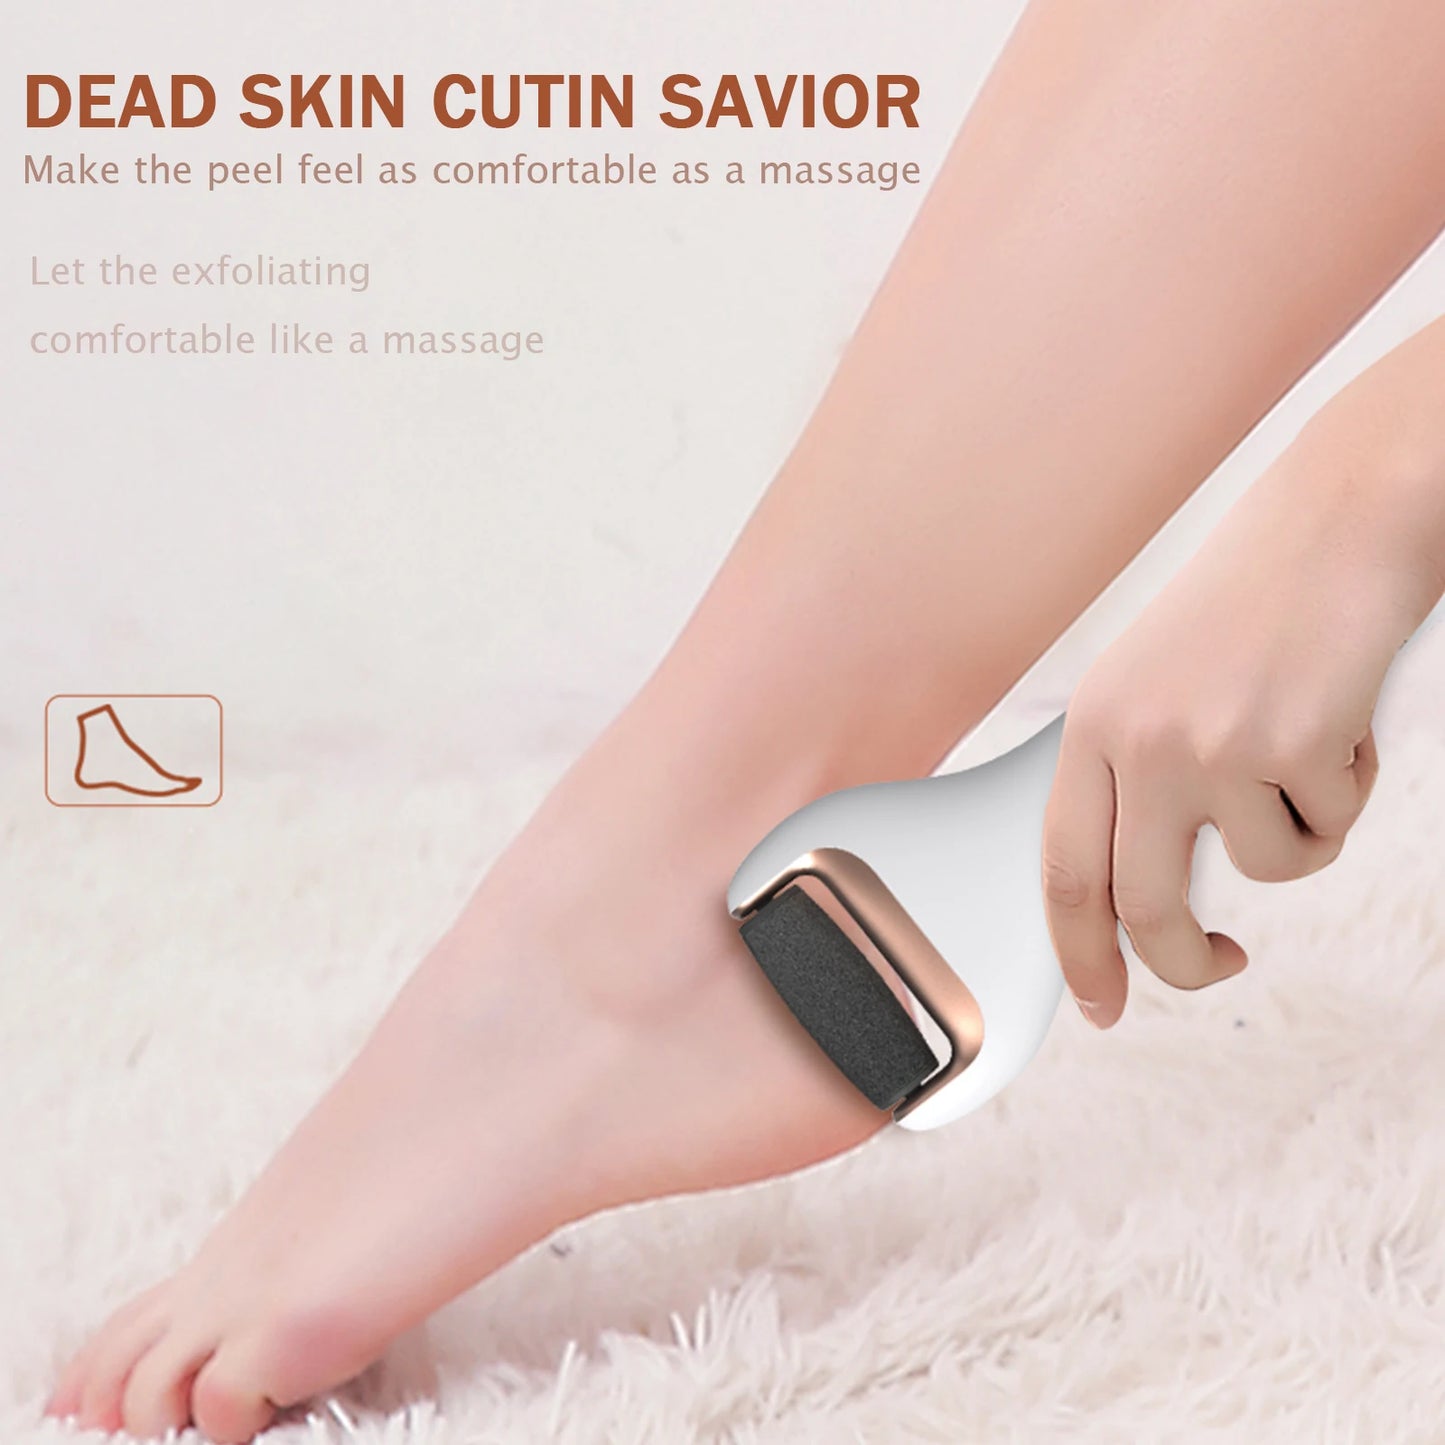 Electric Foot File Grinder Callus Dead Skin Remover